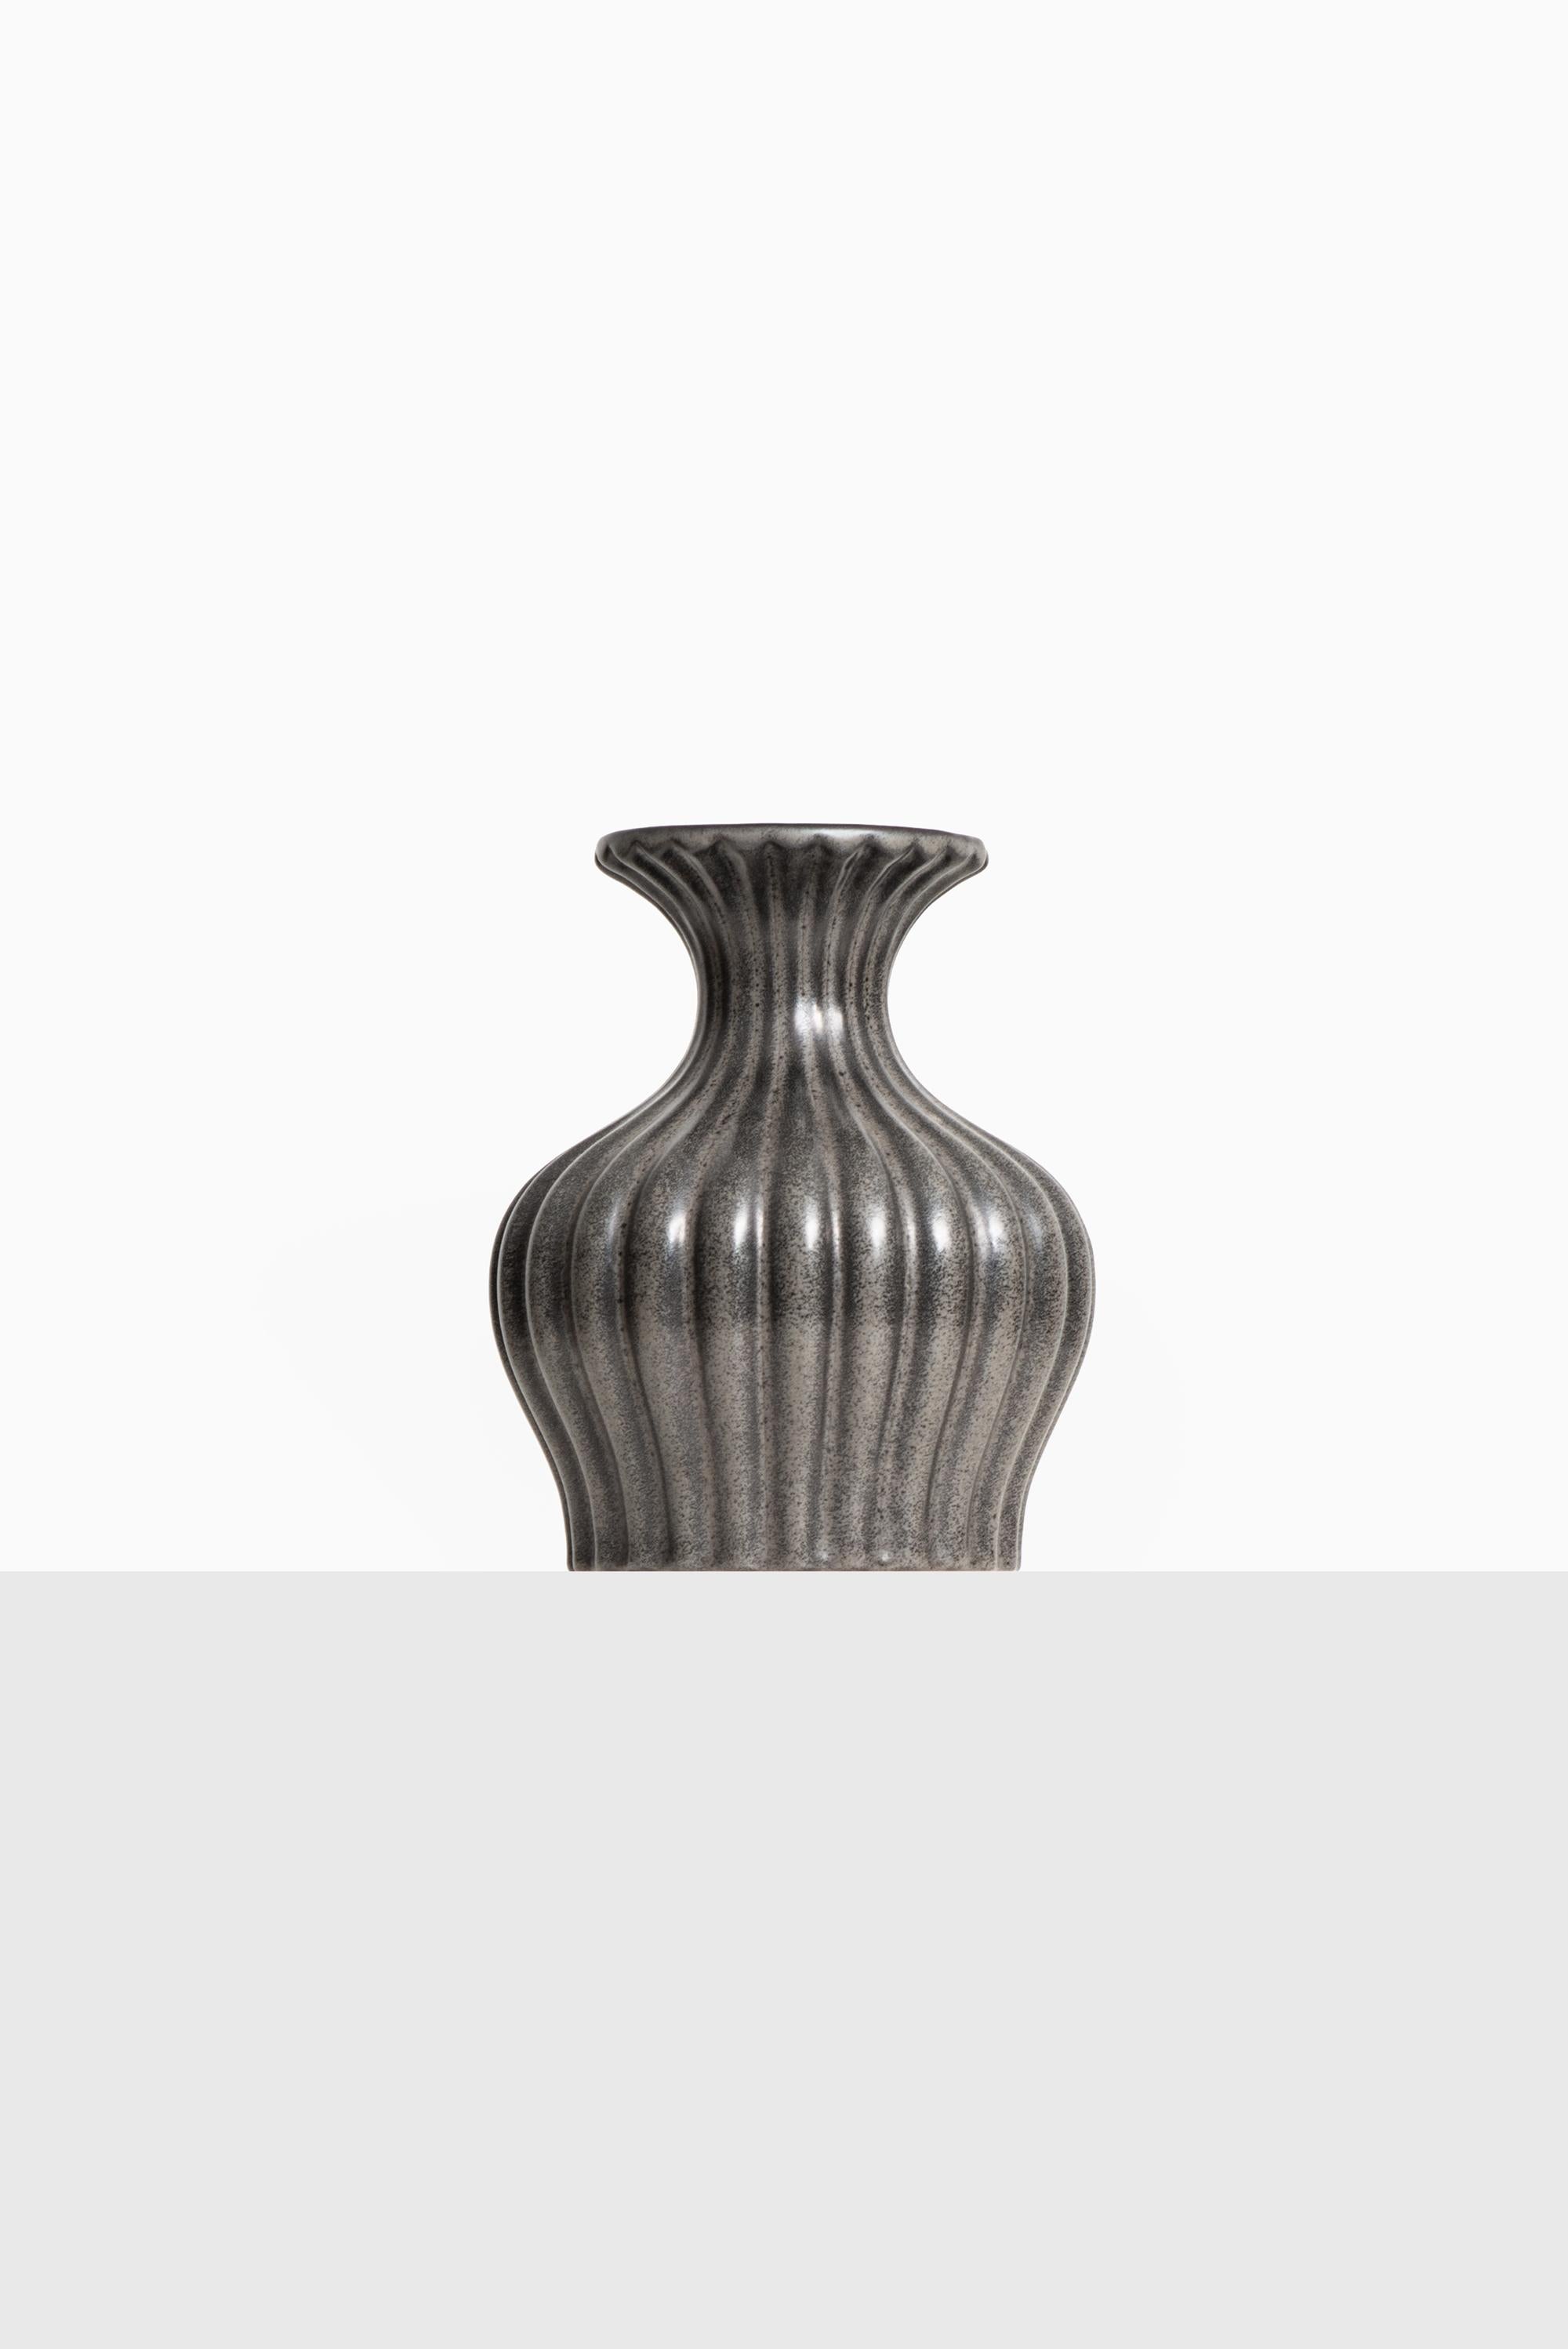 Glazed ceramic vase designed by Ewald Dahlskog. Produced by Bobergs Fajansfabrik in Sweden.